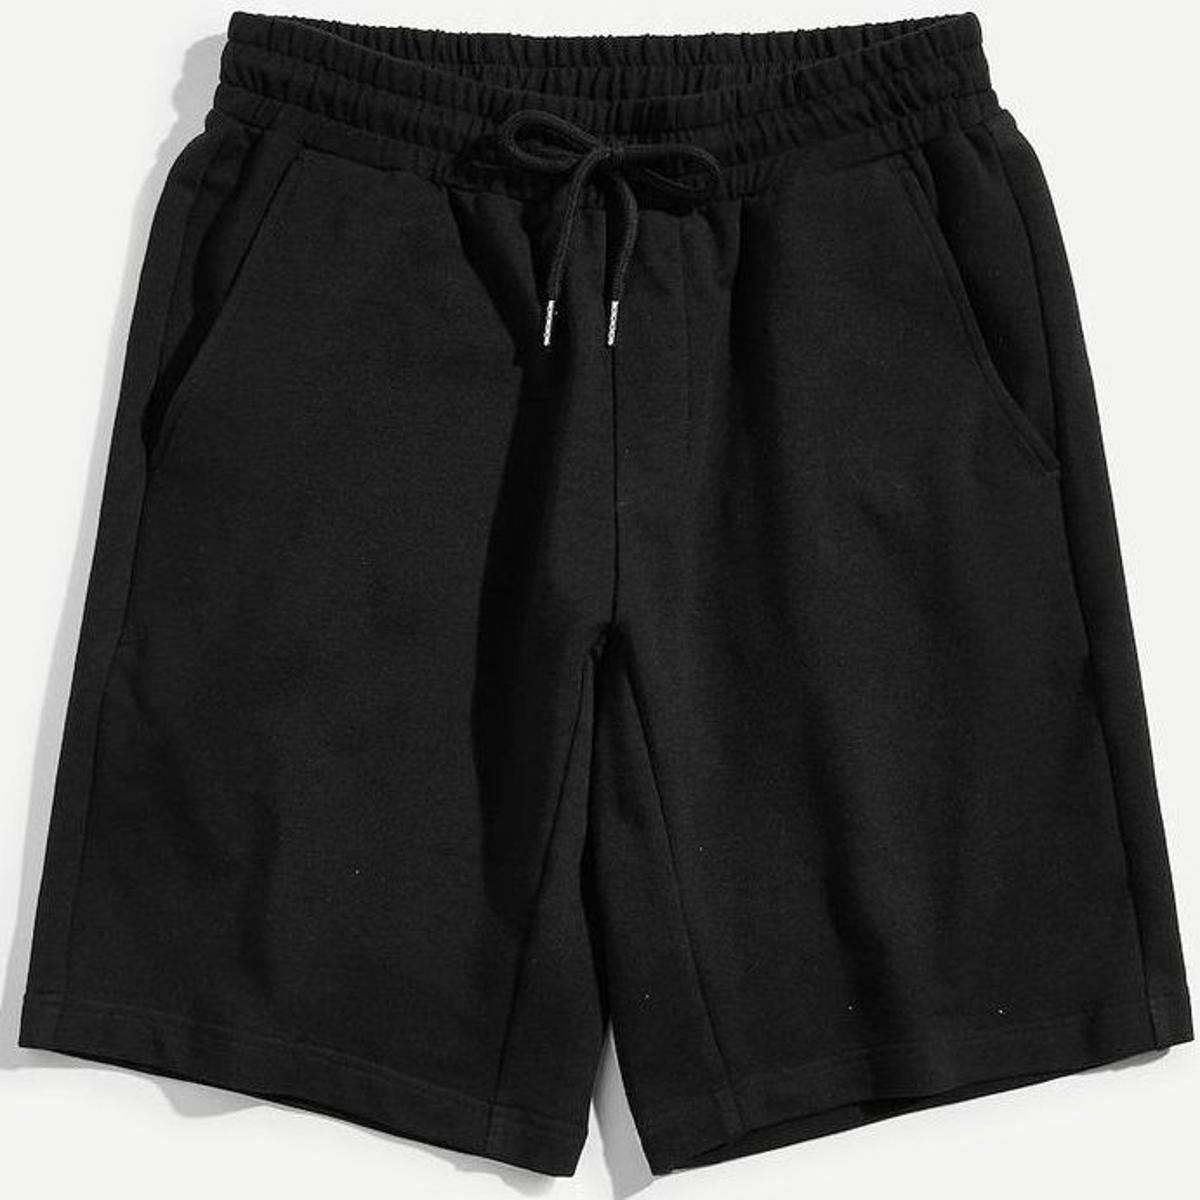 Black Men's Loose-fit Shorts